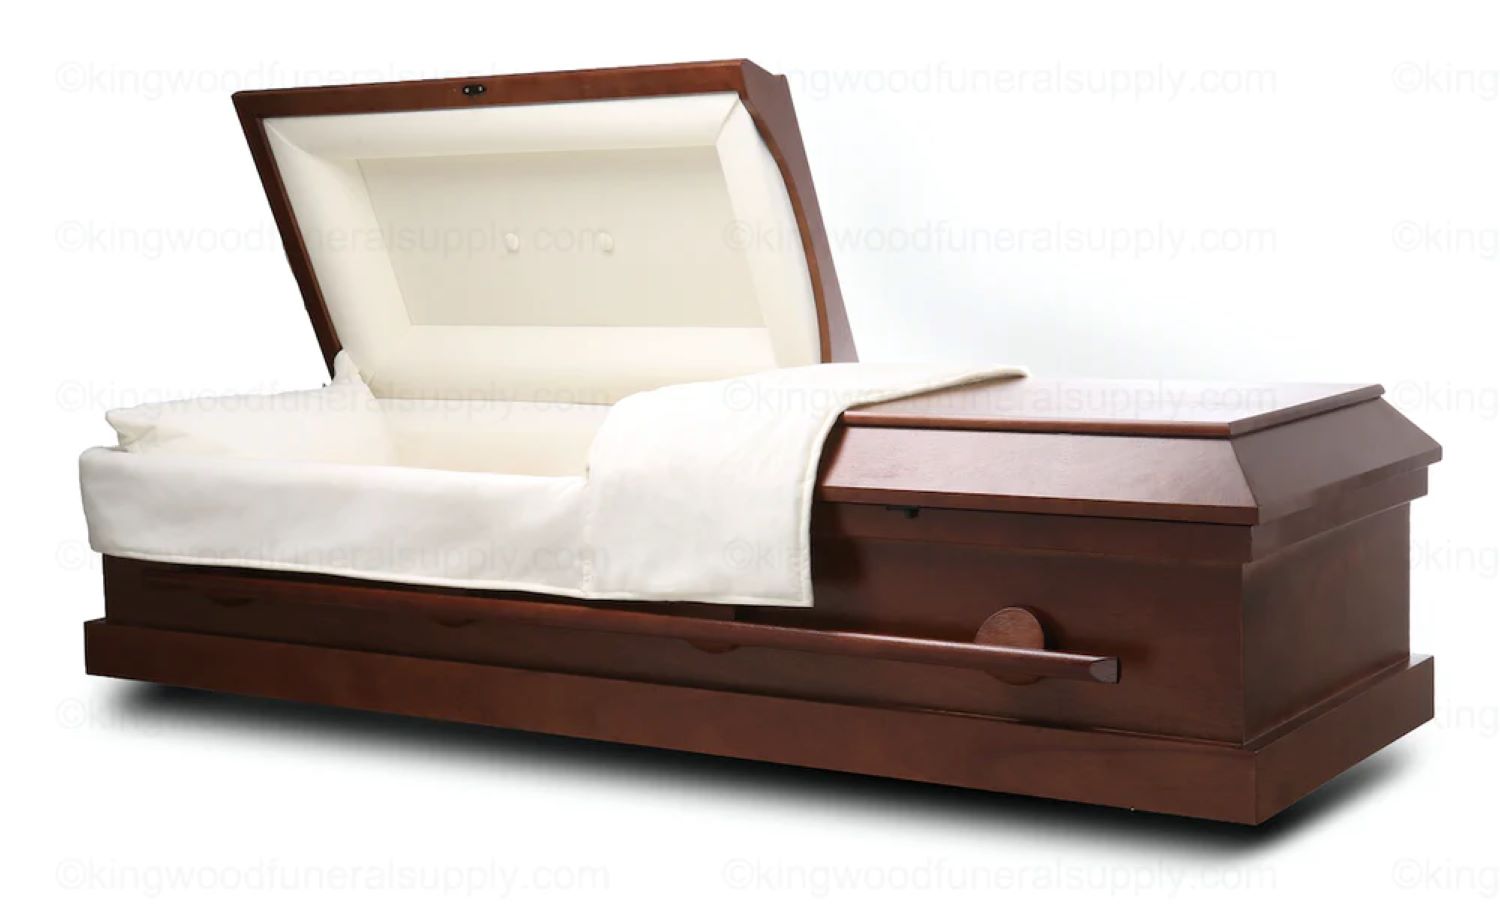 Photo of CARINA - Wood Veneer Cremation or Burial Casket Casket